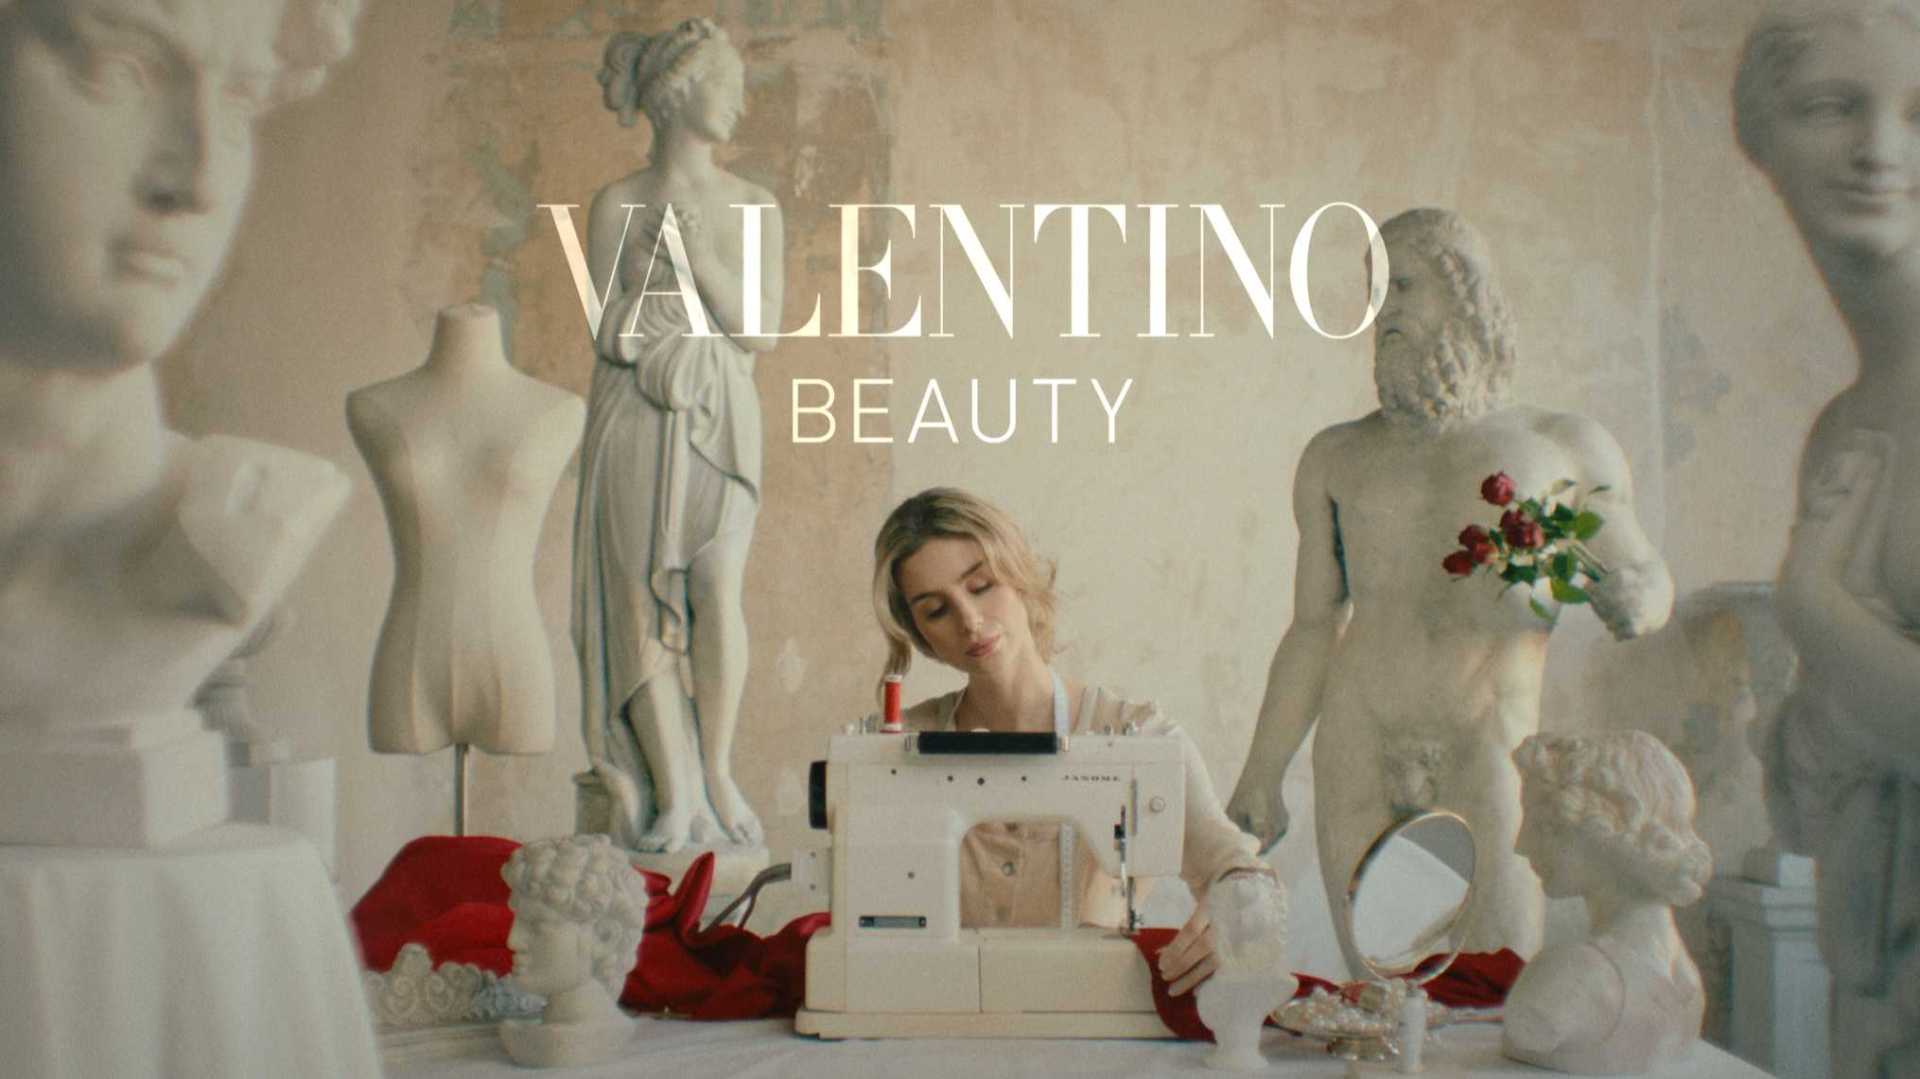 Valentino Beauty "Rosso 111A" Campaign